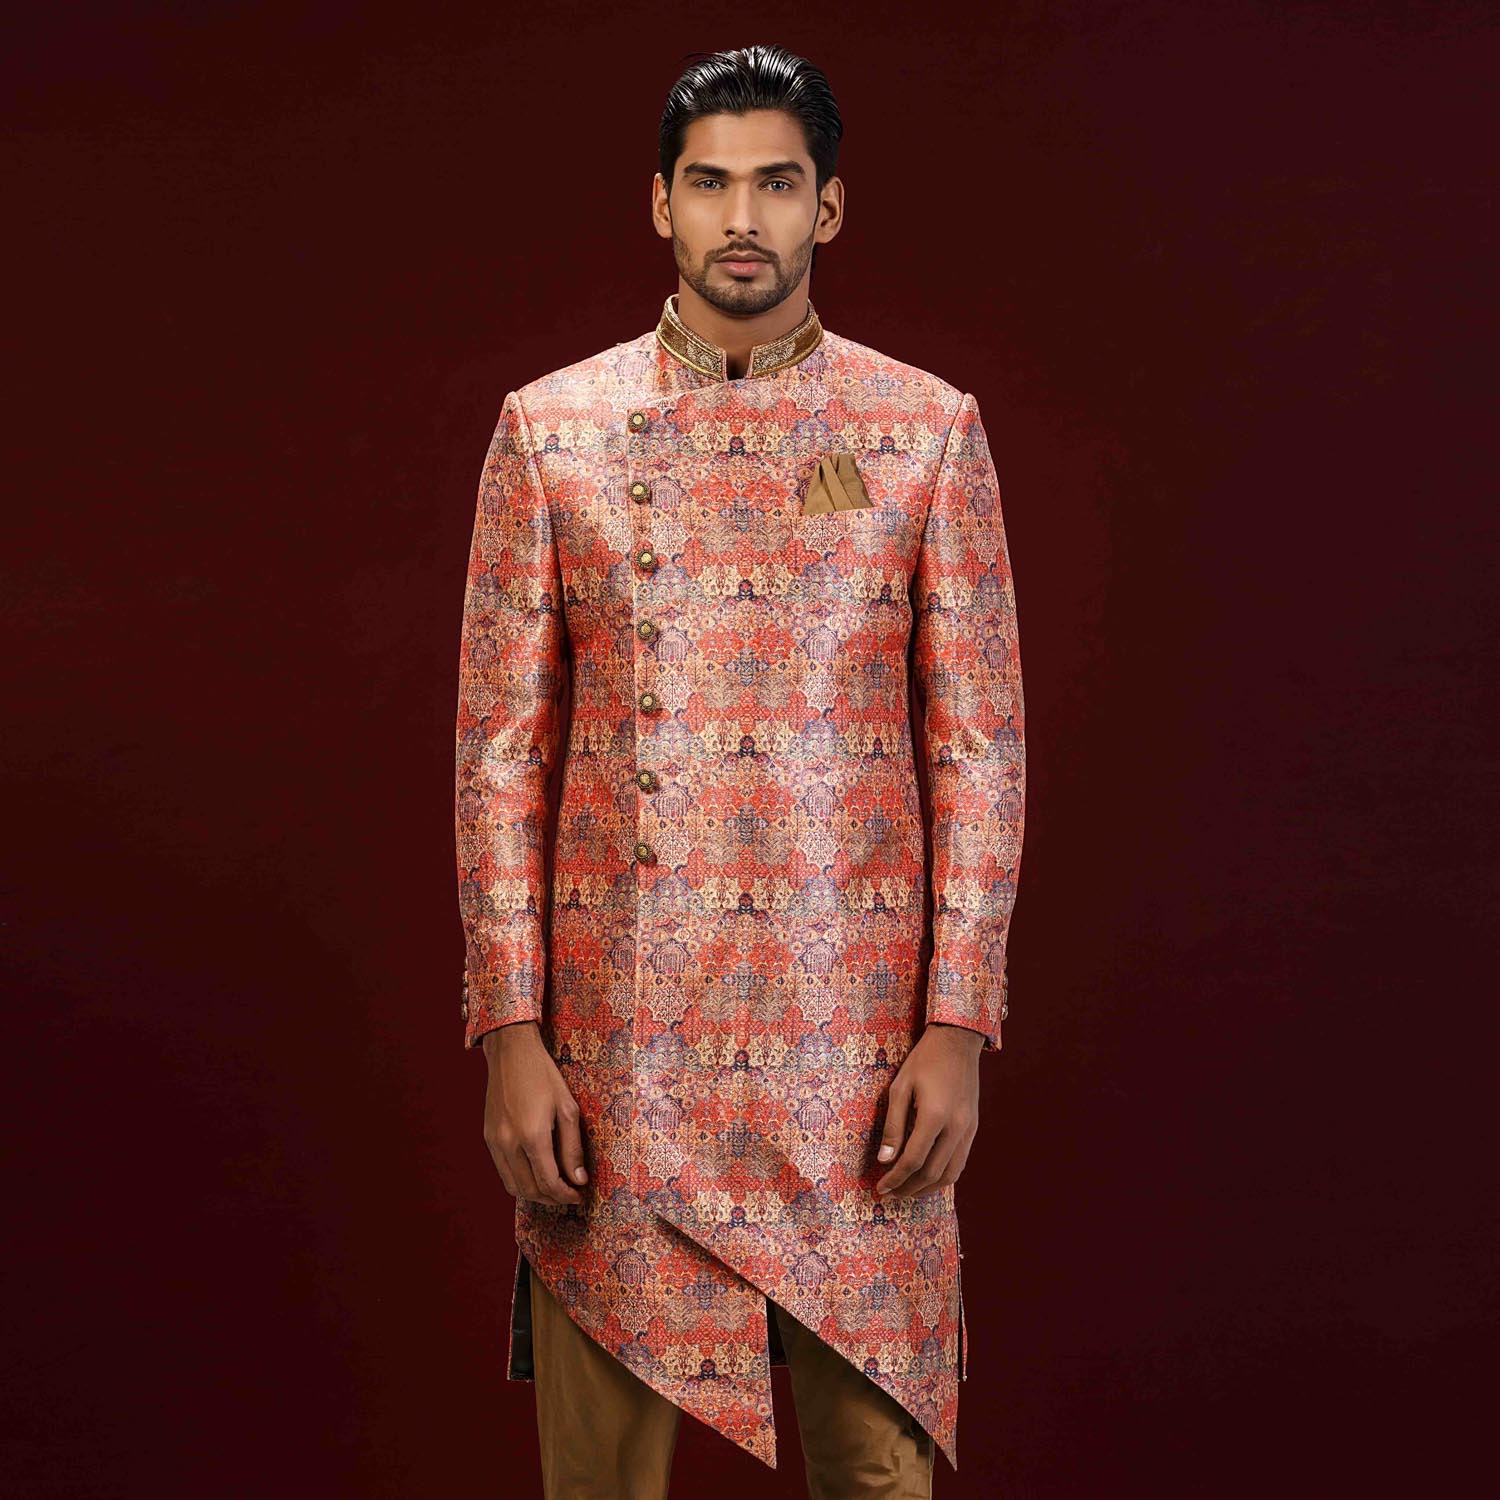 Raw Nation - Men's Fashion Brand In Bangladesh